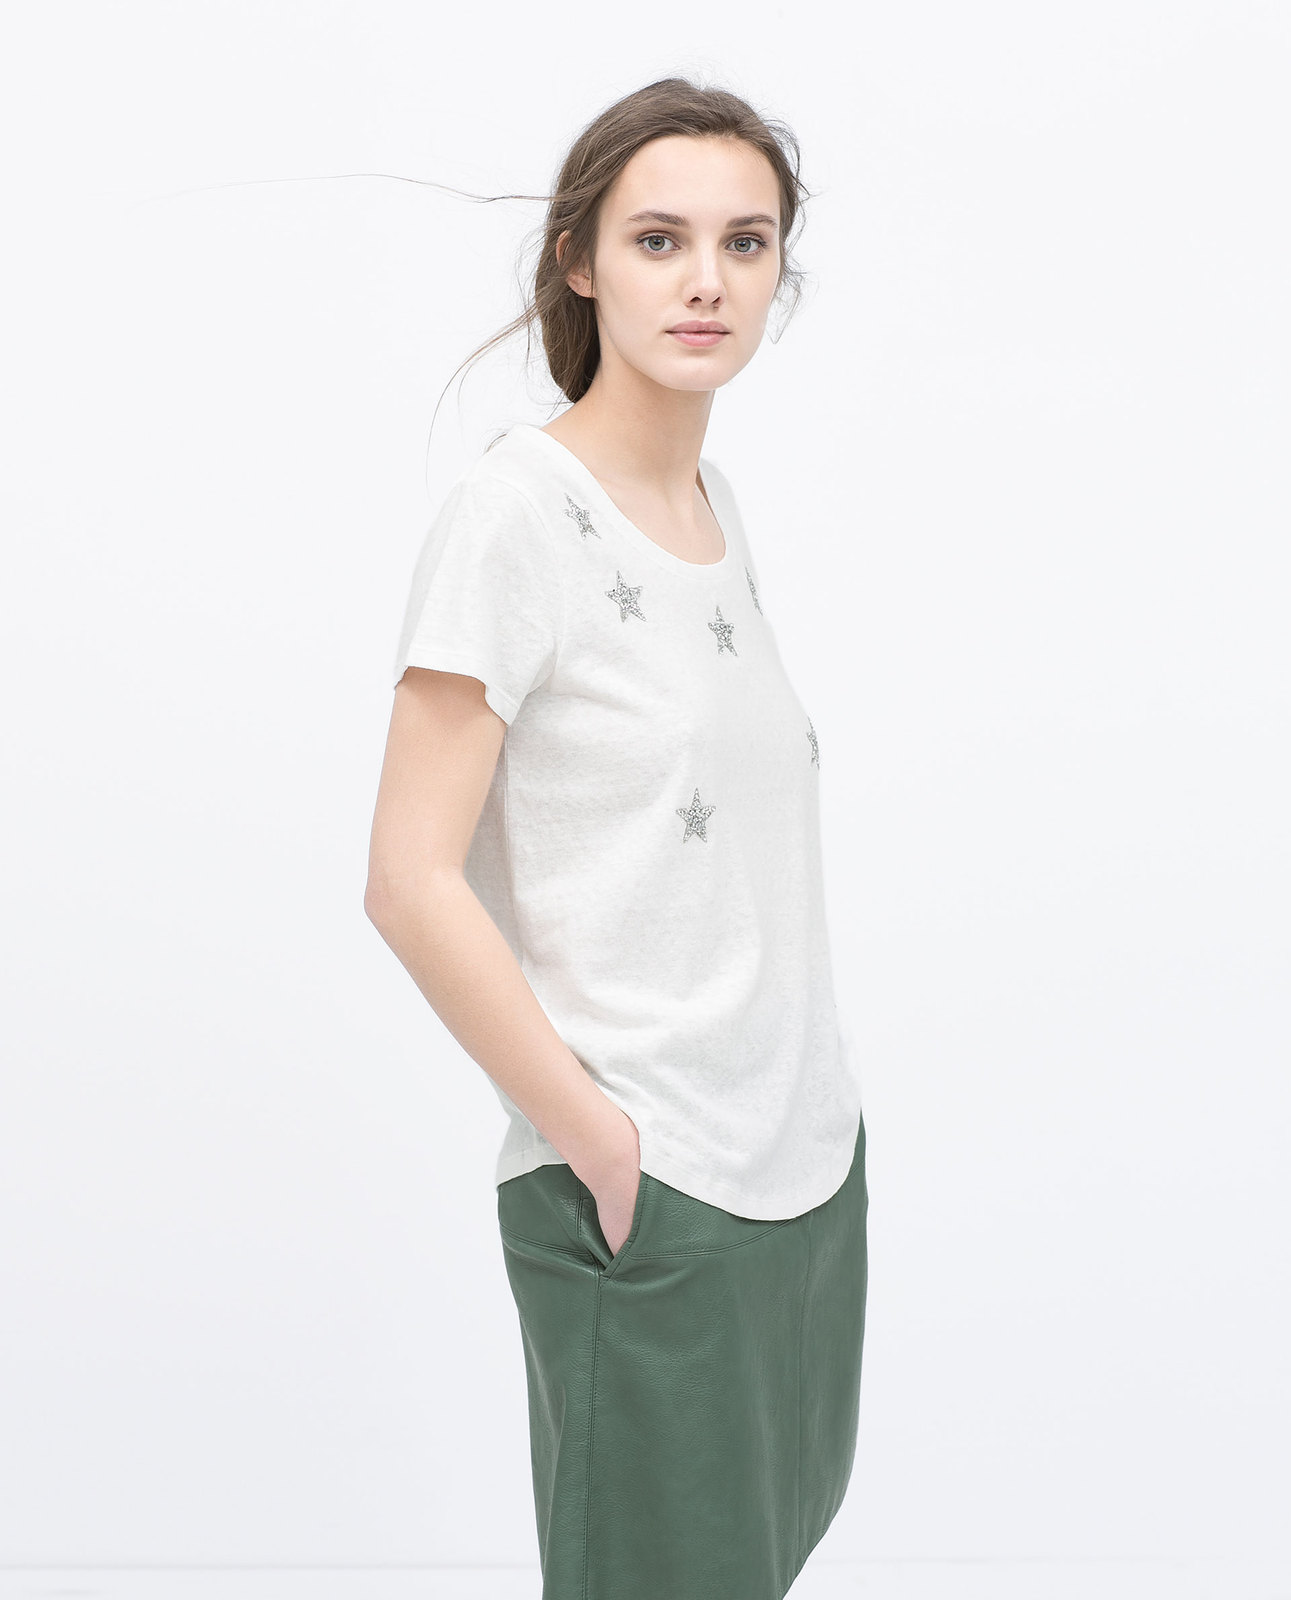 Zara csillagos fehér T-shirt fotója